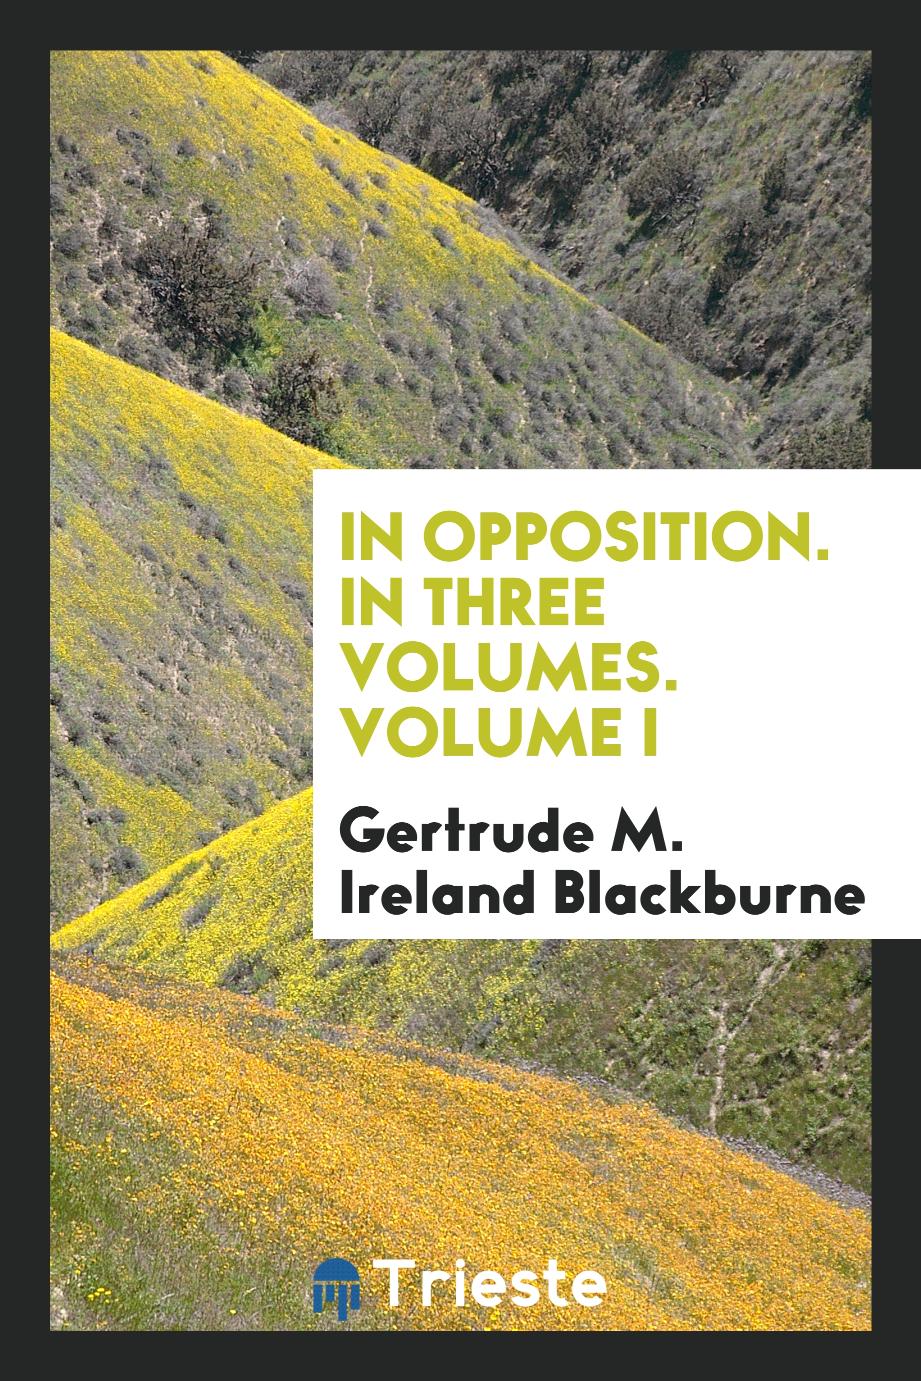 In opposition. In three volumes. Volume I